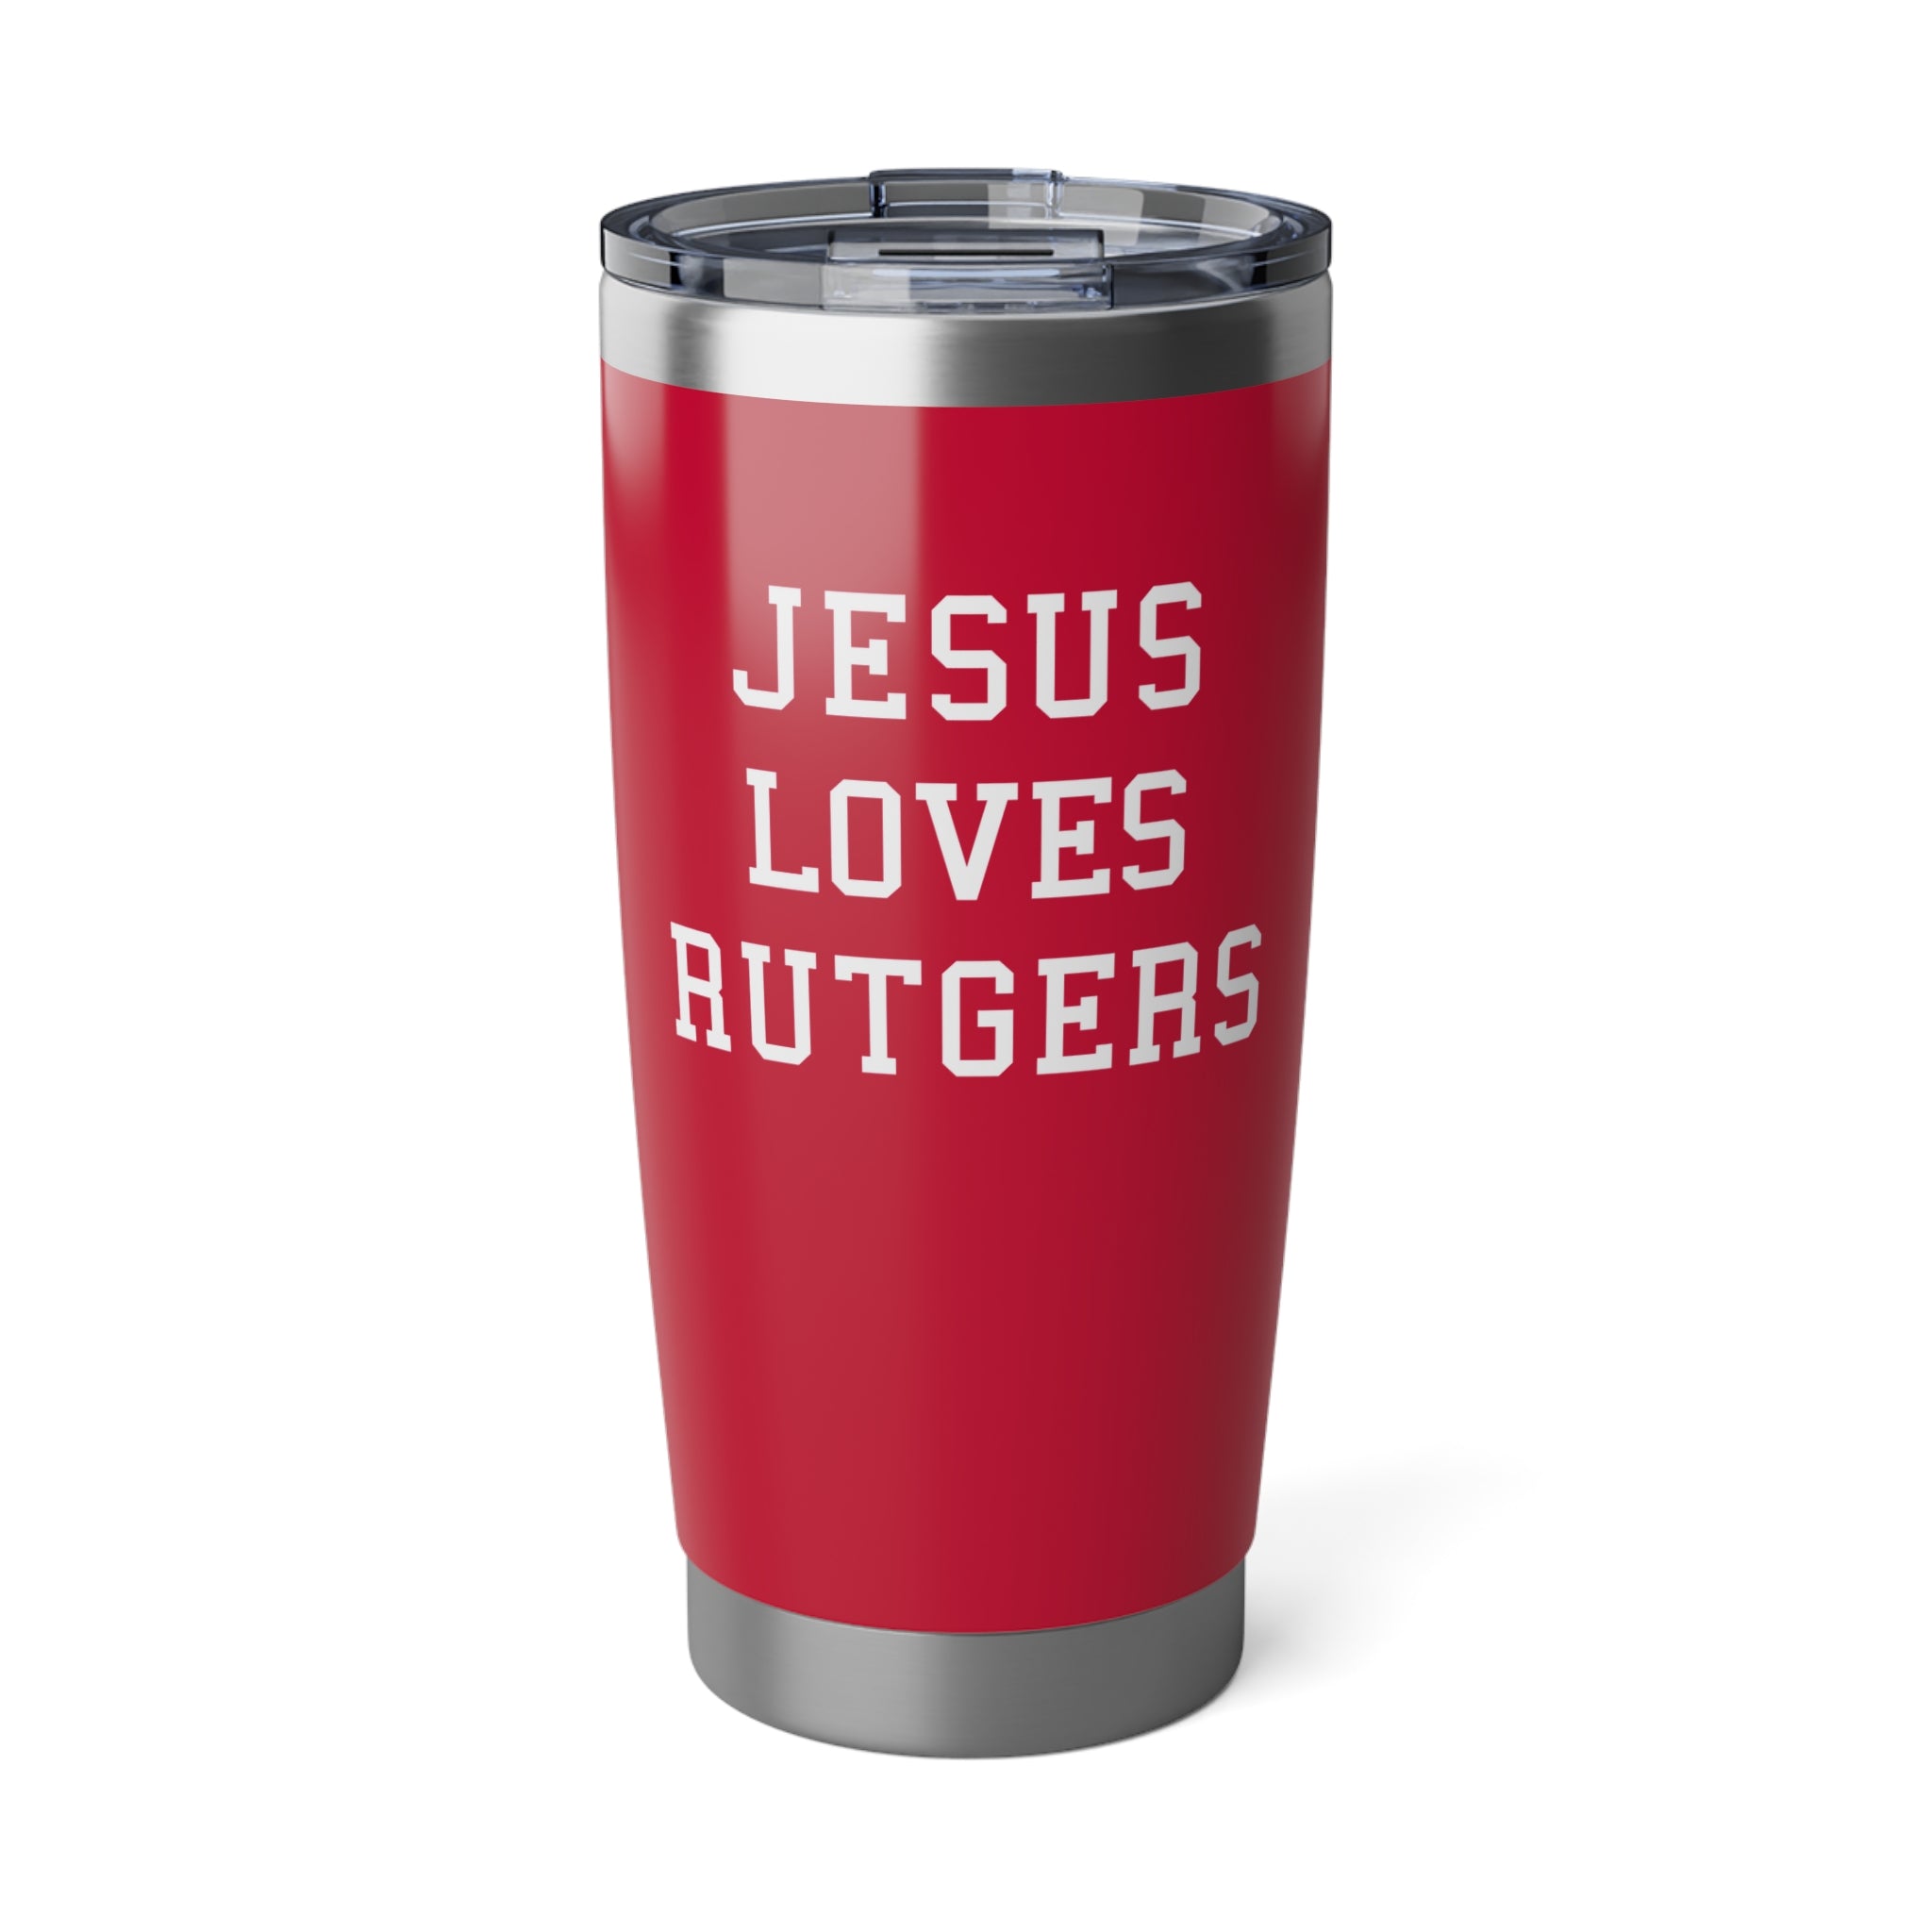 Coffee and Jesus 20oz Tumber